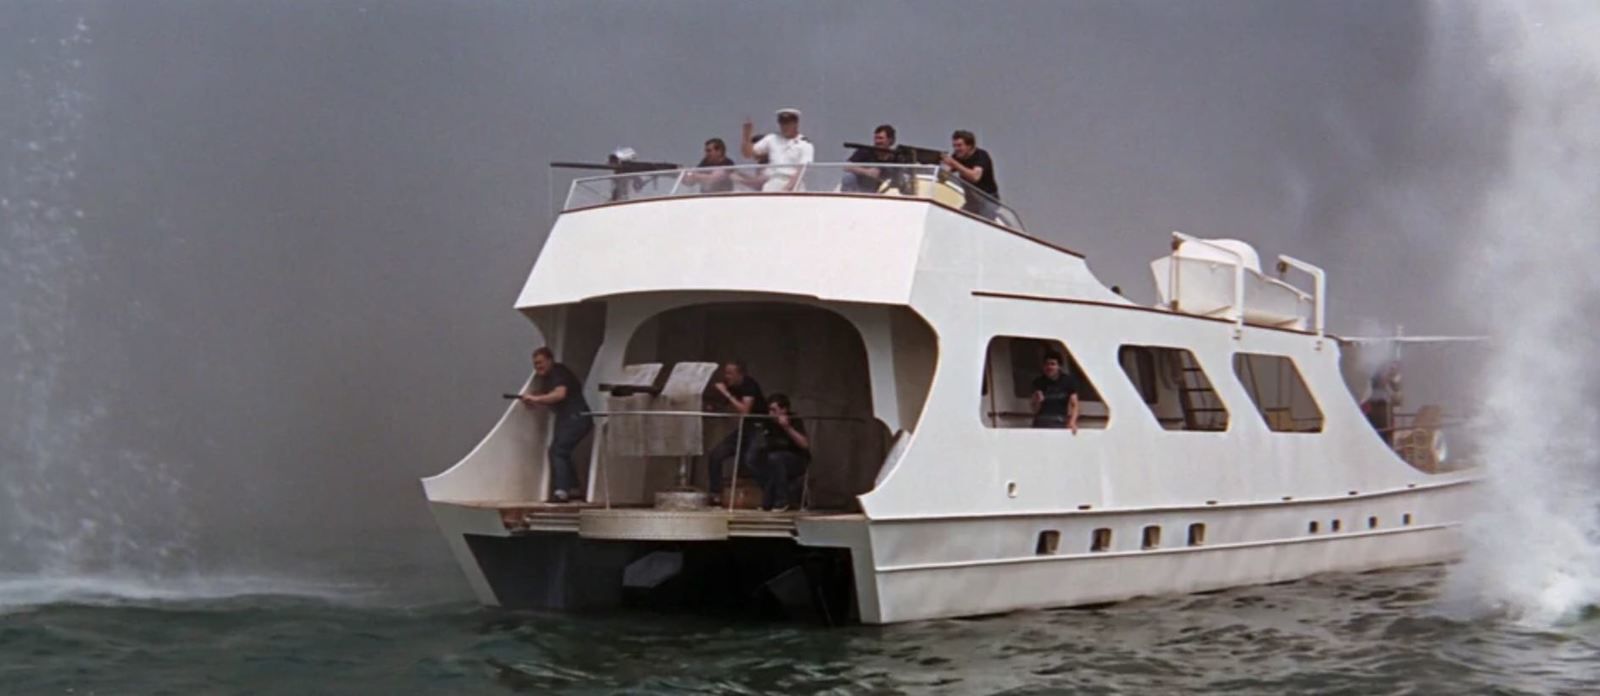 James Bond - Disco Volante, Emilio Largo's hydrofoil yacht - Yachting Art  Magazine